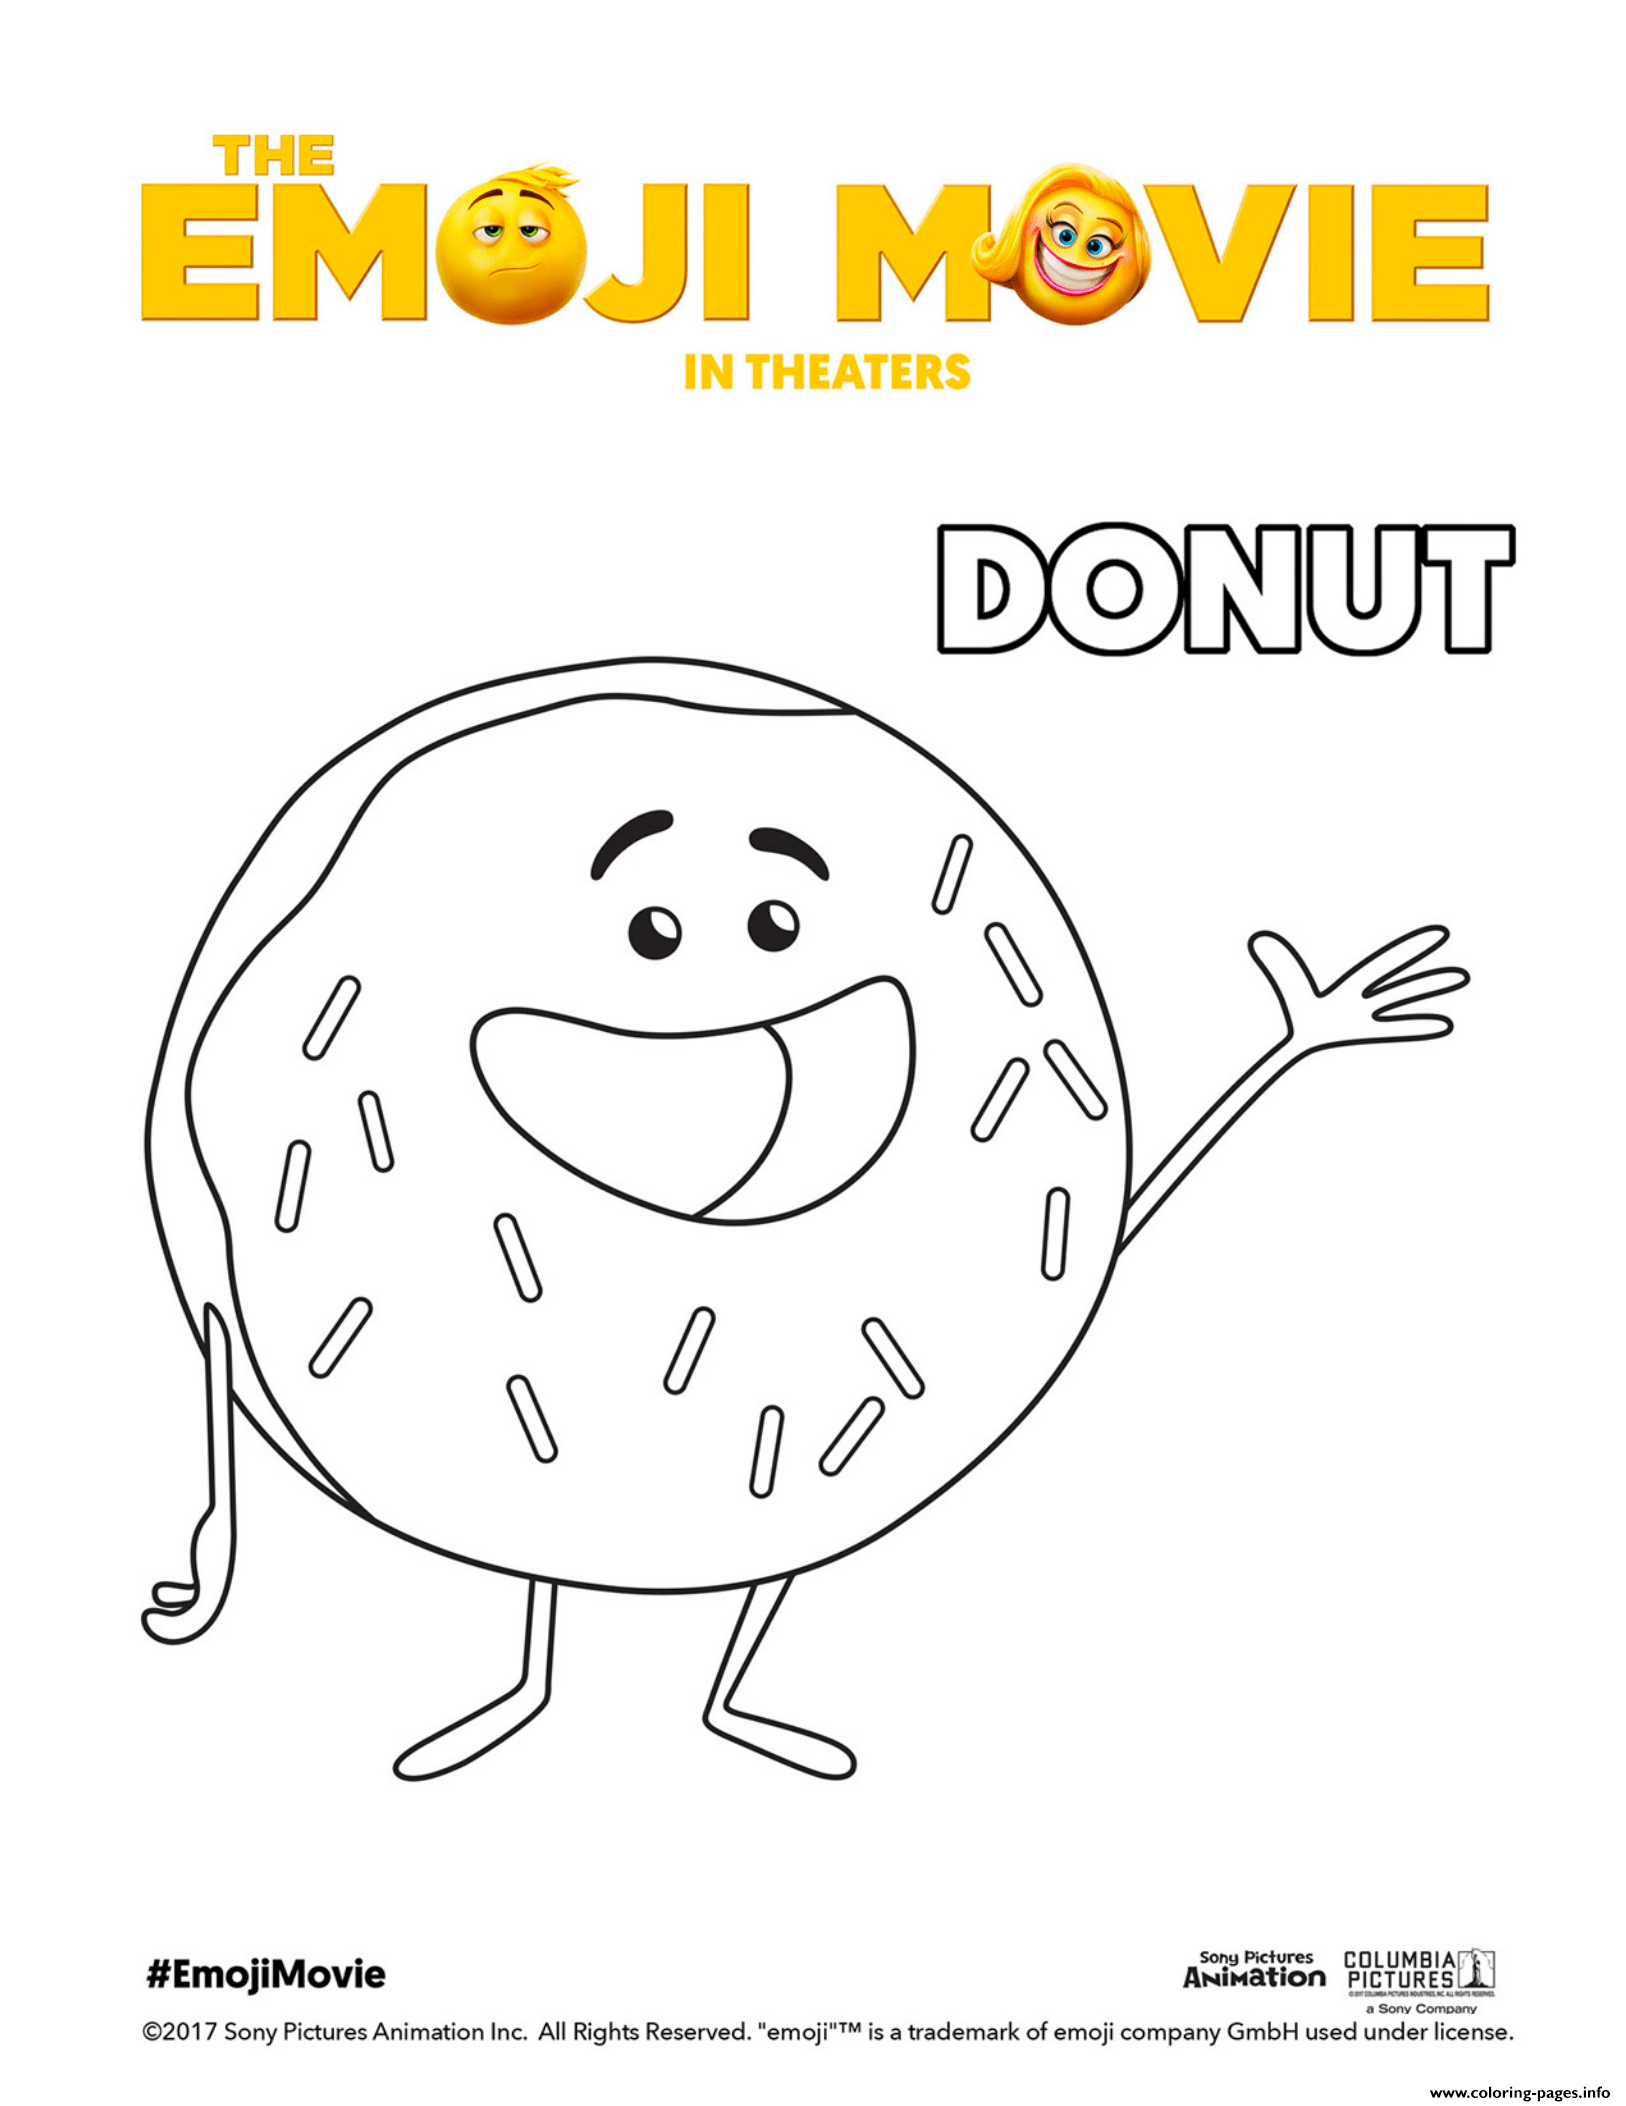 Donut Emoji Movie coloring